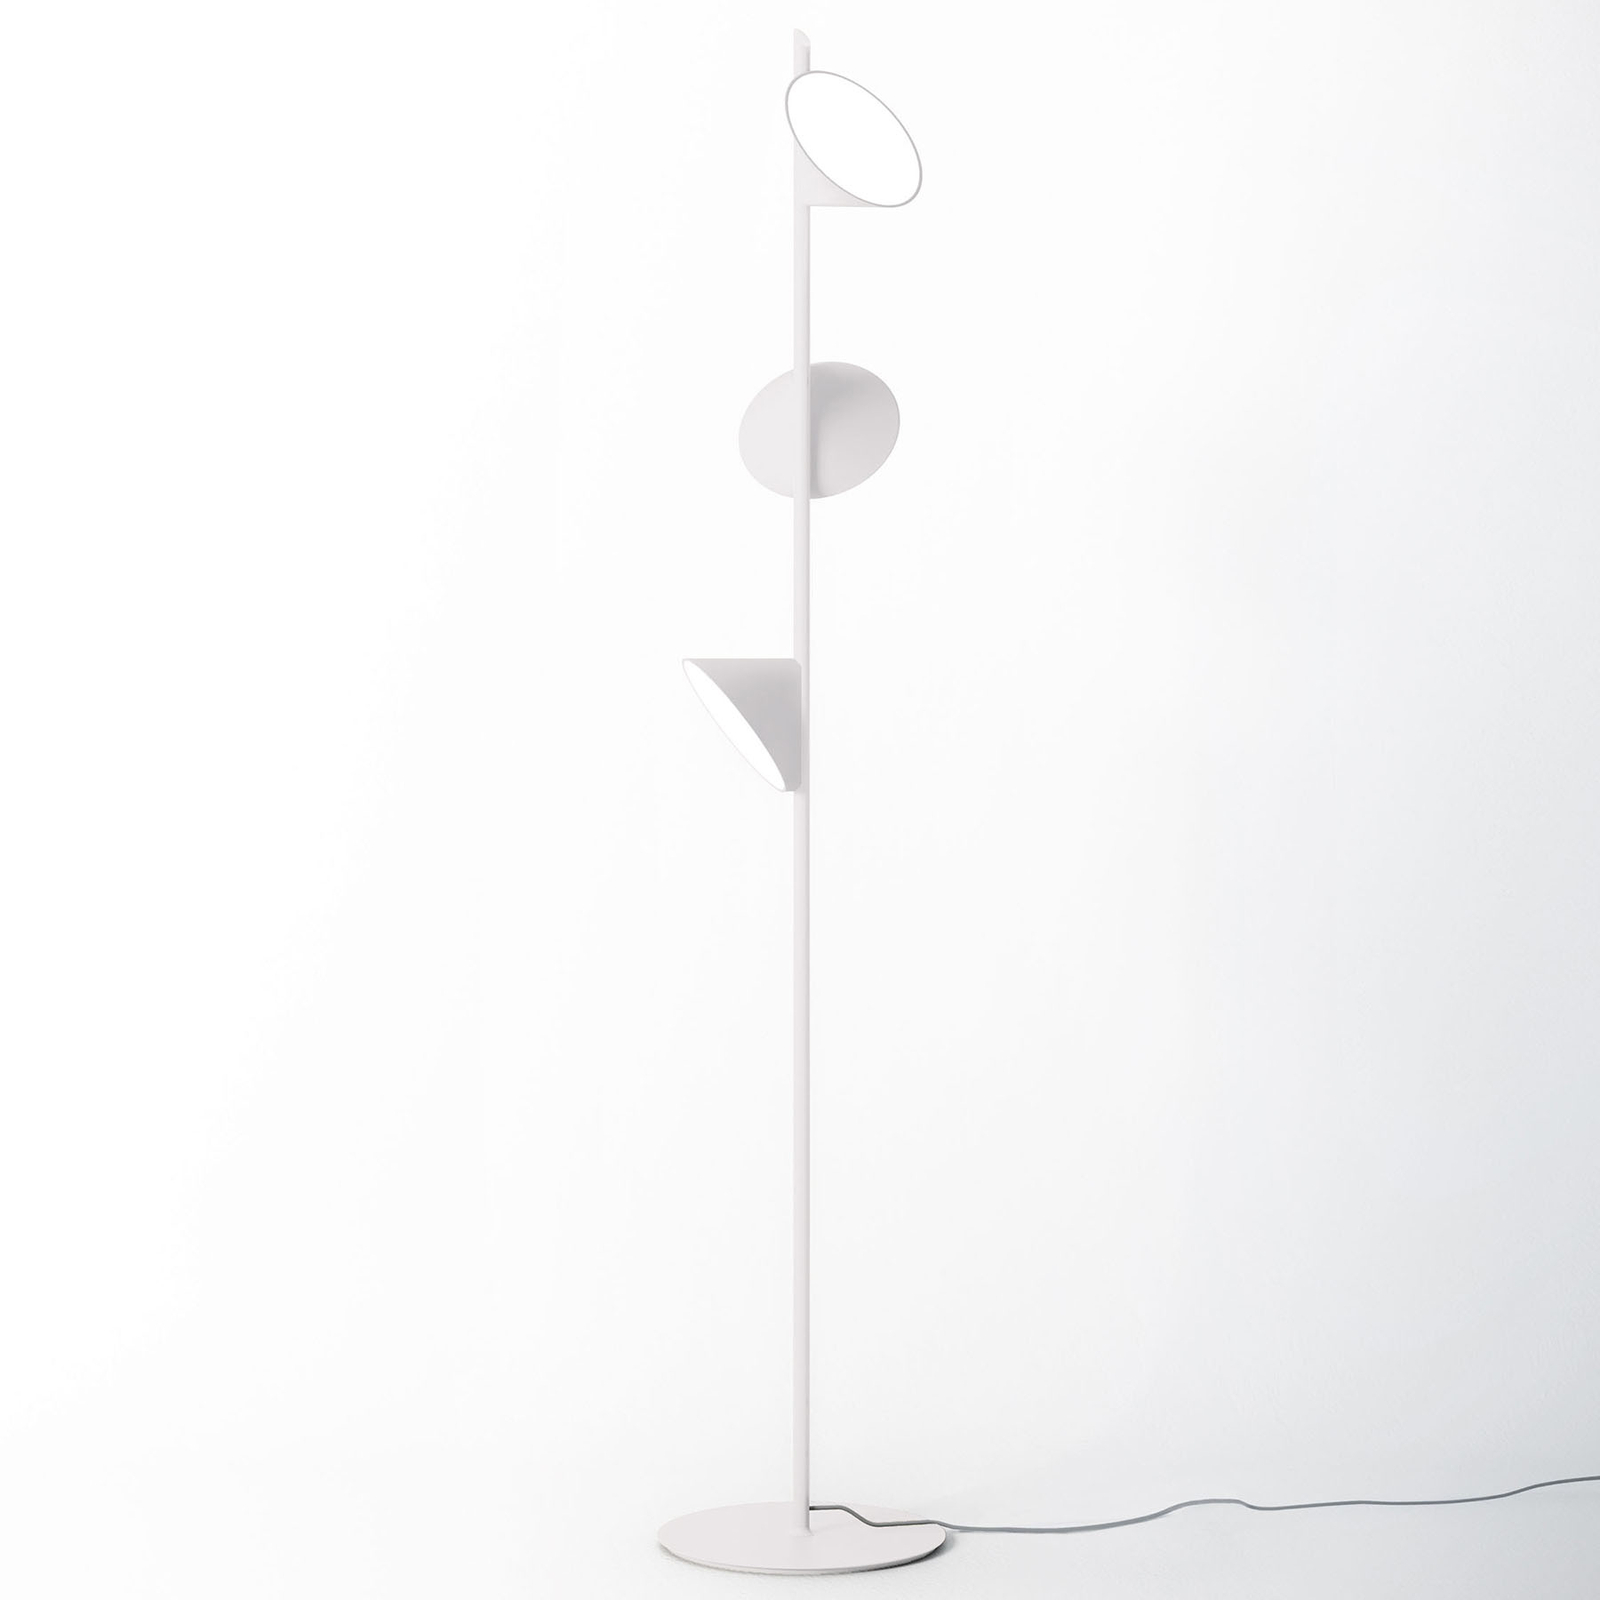 Axolight Orchid LED floor lamp, white